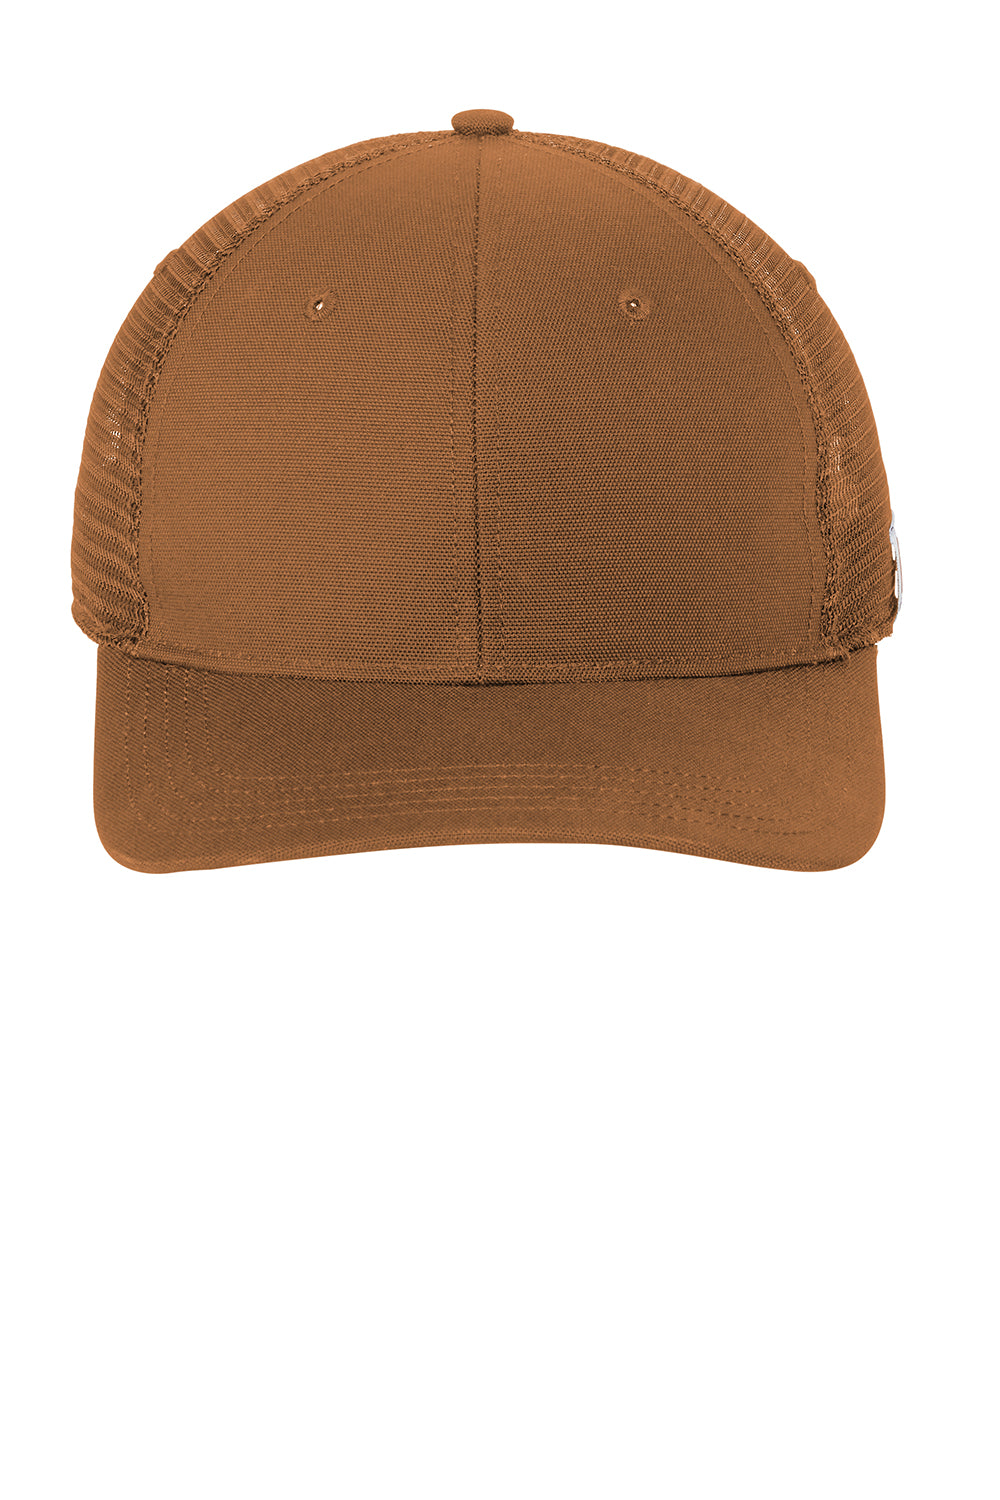 Carhartt CT105298 Mens Moisture Wicking Canvas Mesh Back Hat Carhartt Brown Flat Front